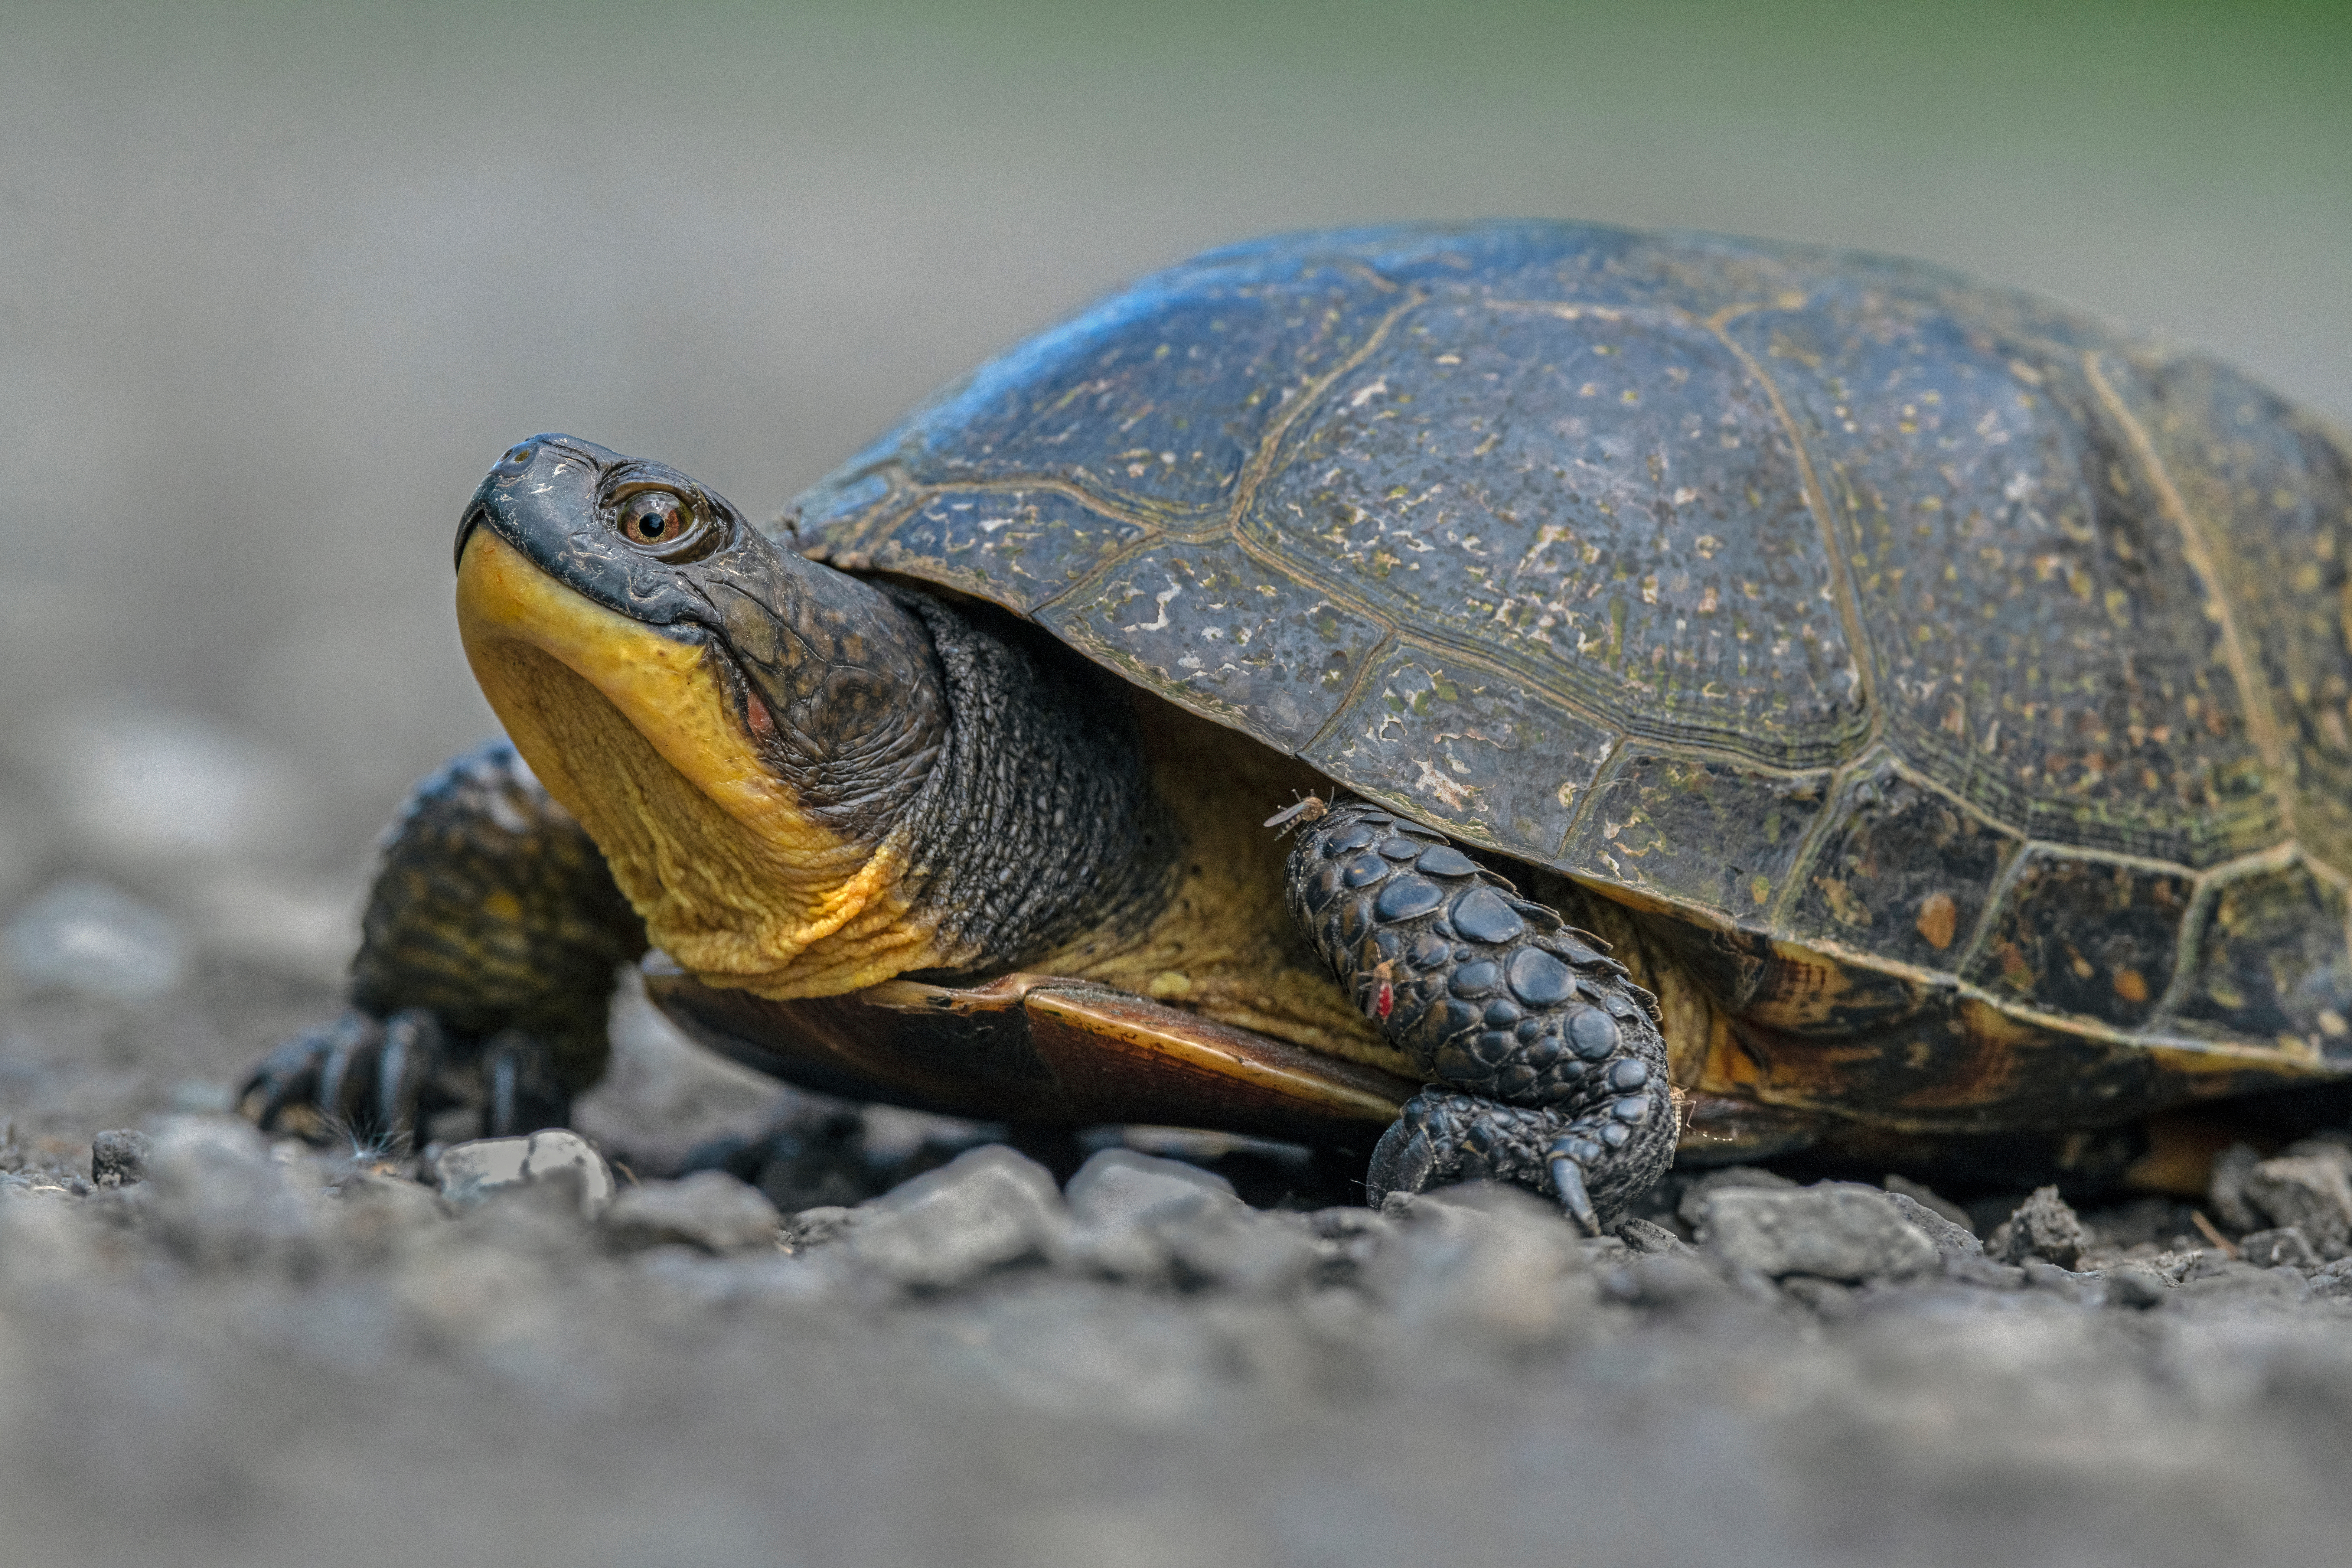 The Endangered Blanding's Turtle